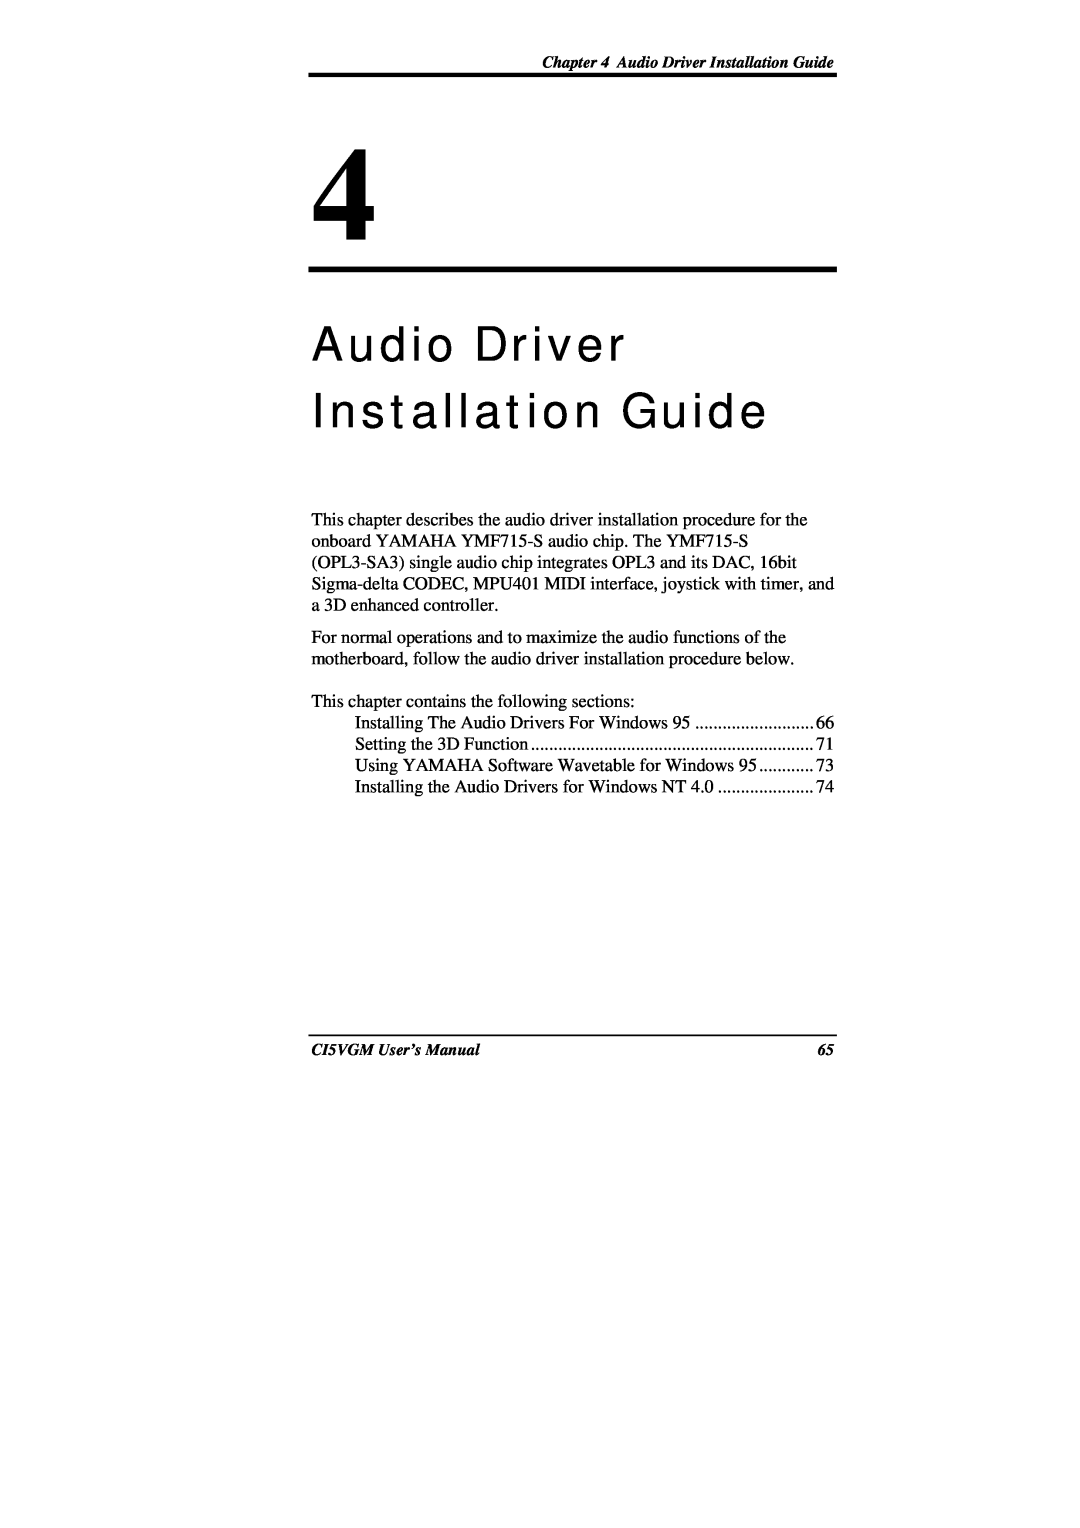 IBM CI5VGM Series user manual Audio Driver Installation Guide 